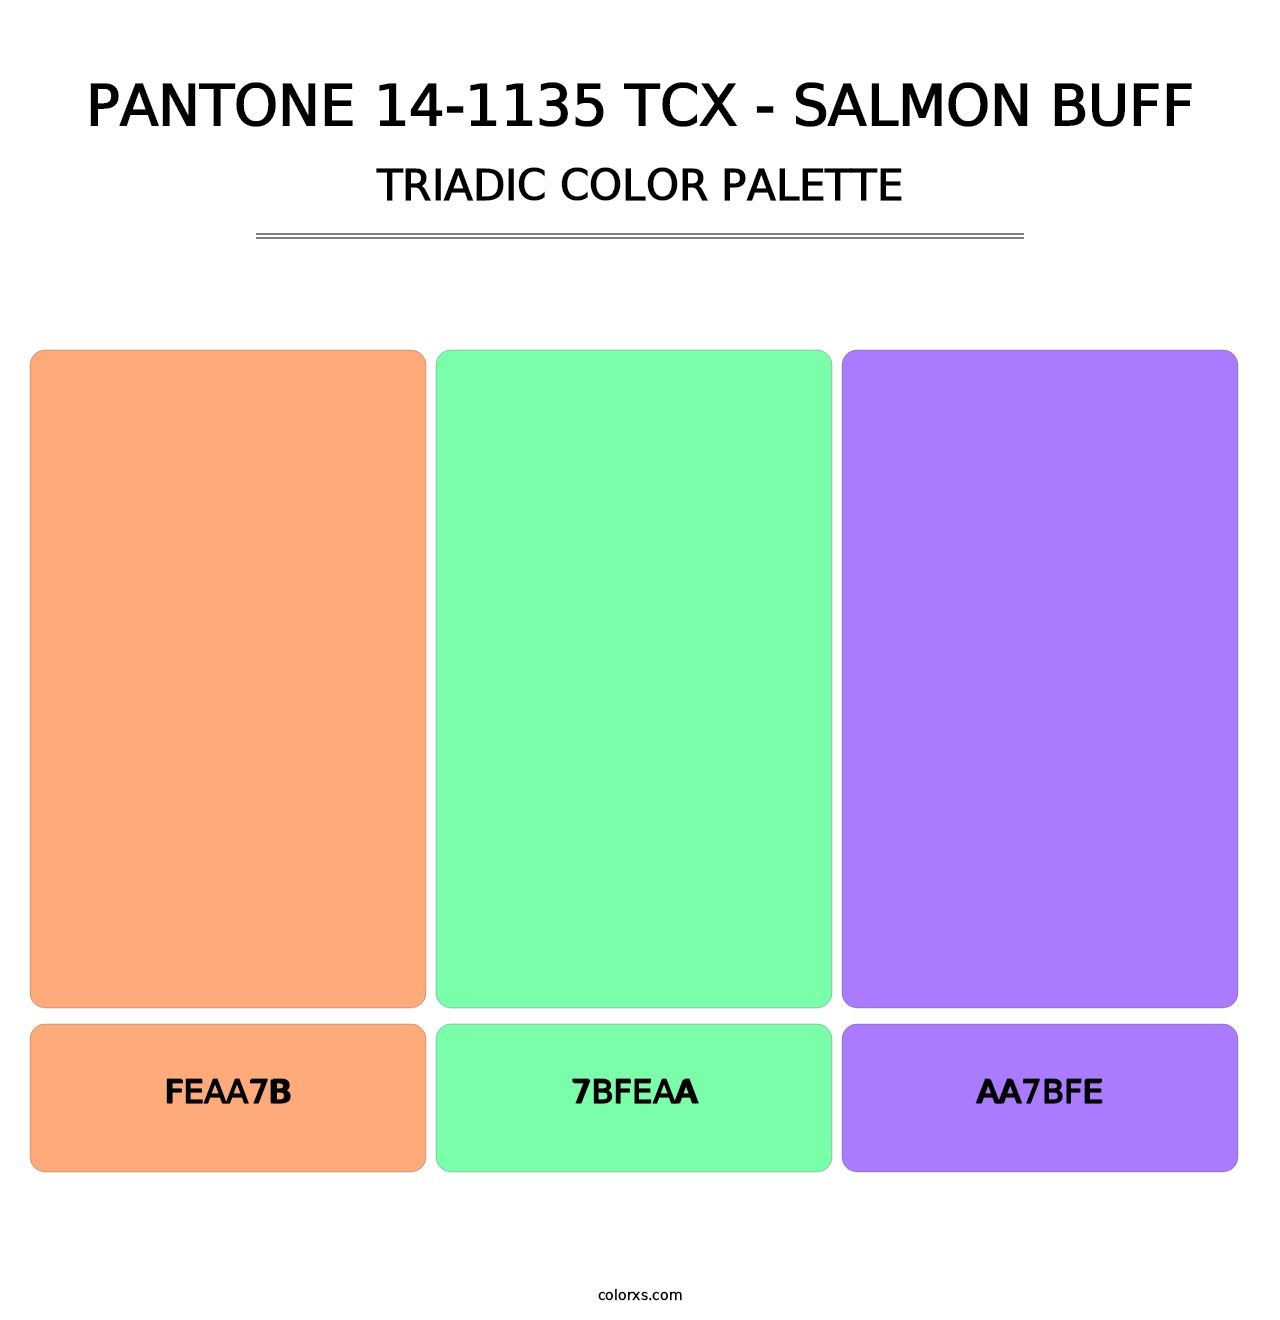 PANTONE 14-1135 TCX - Salmon Buff - Triadic Color Palette